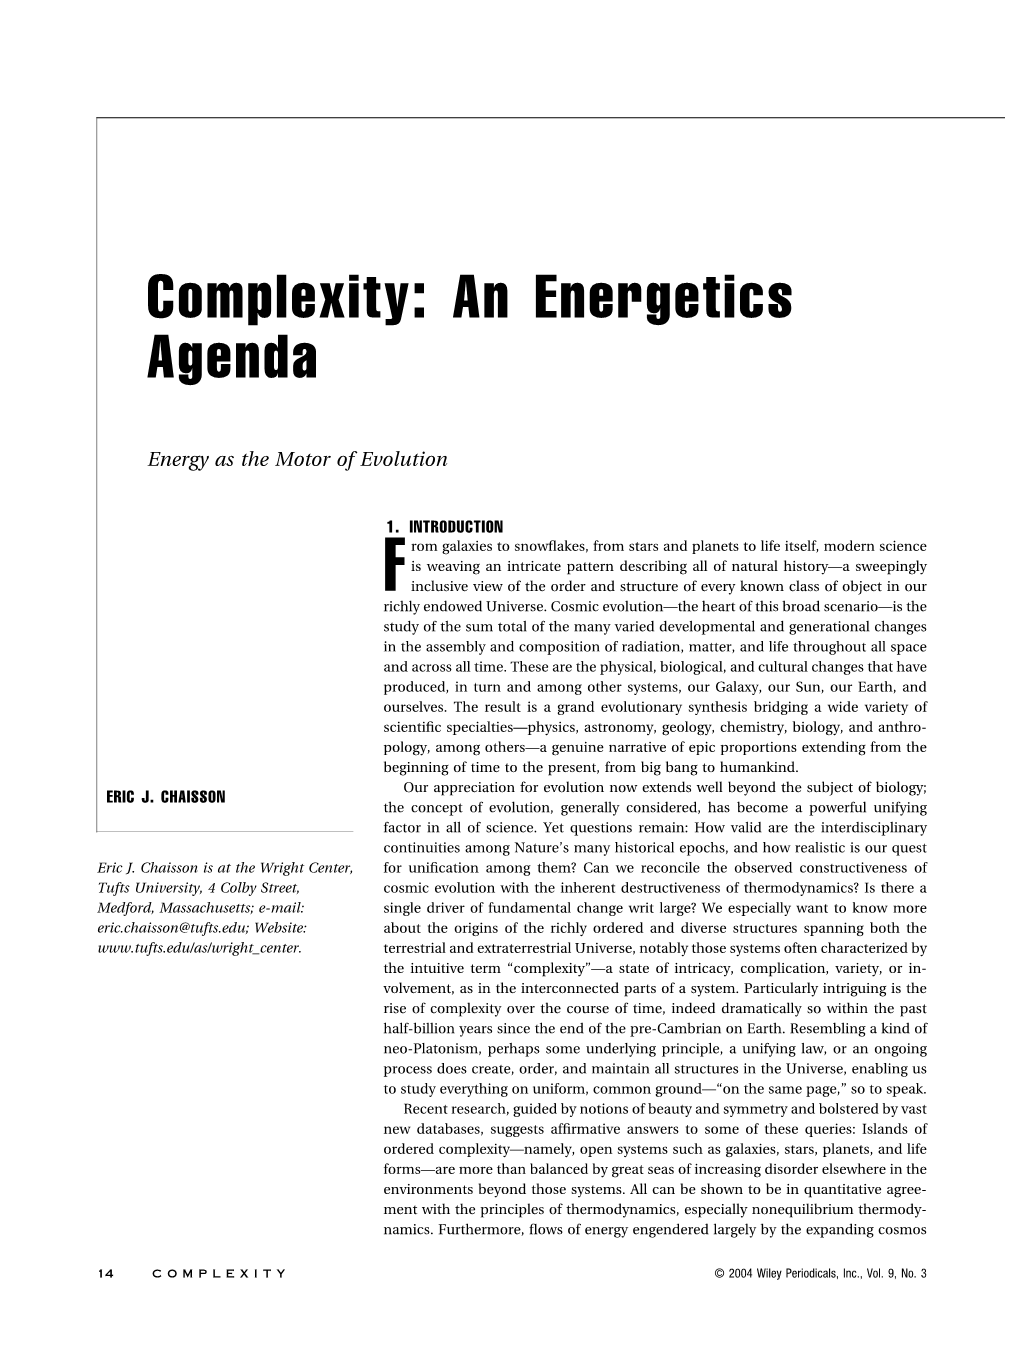 Complexity: an Energetics Agenda